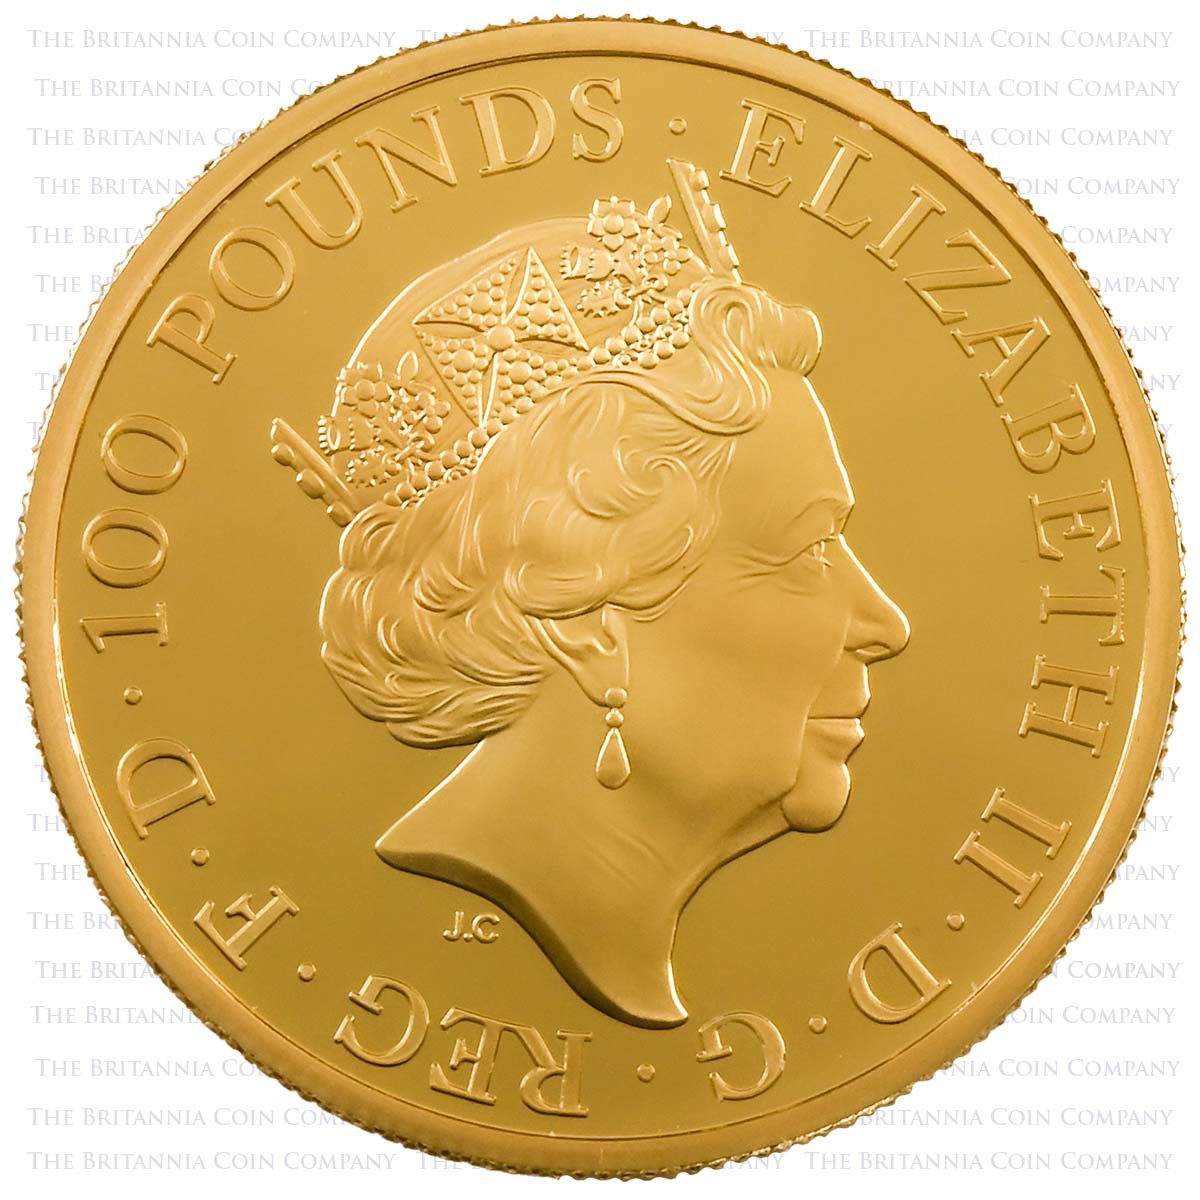 BR22GSET 2022 Britannia 6 Coin Set Gold Proof 1oz Obverse